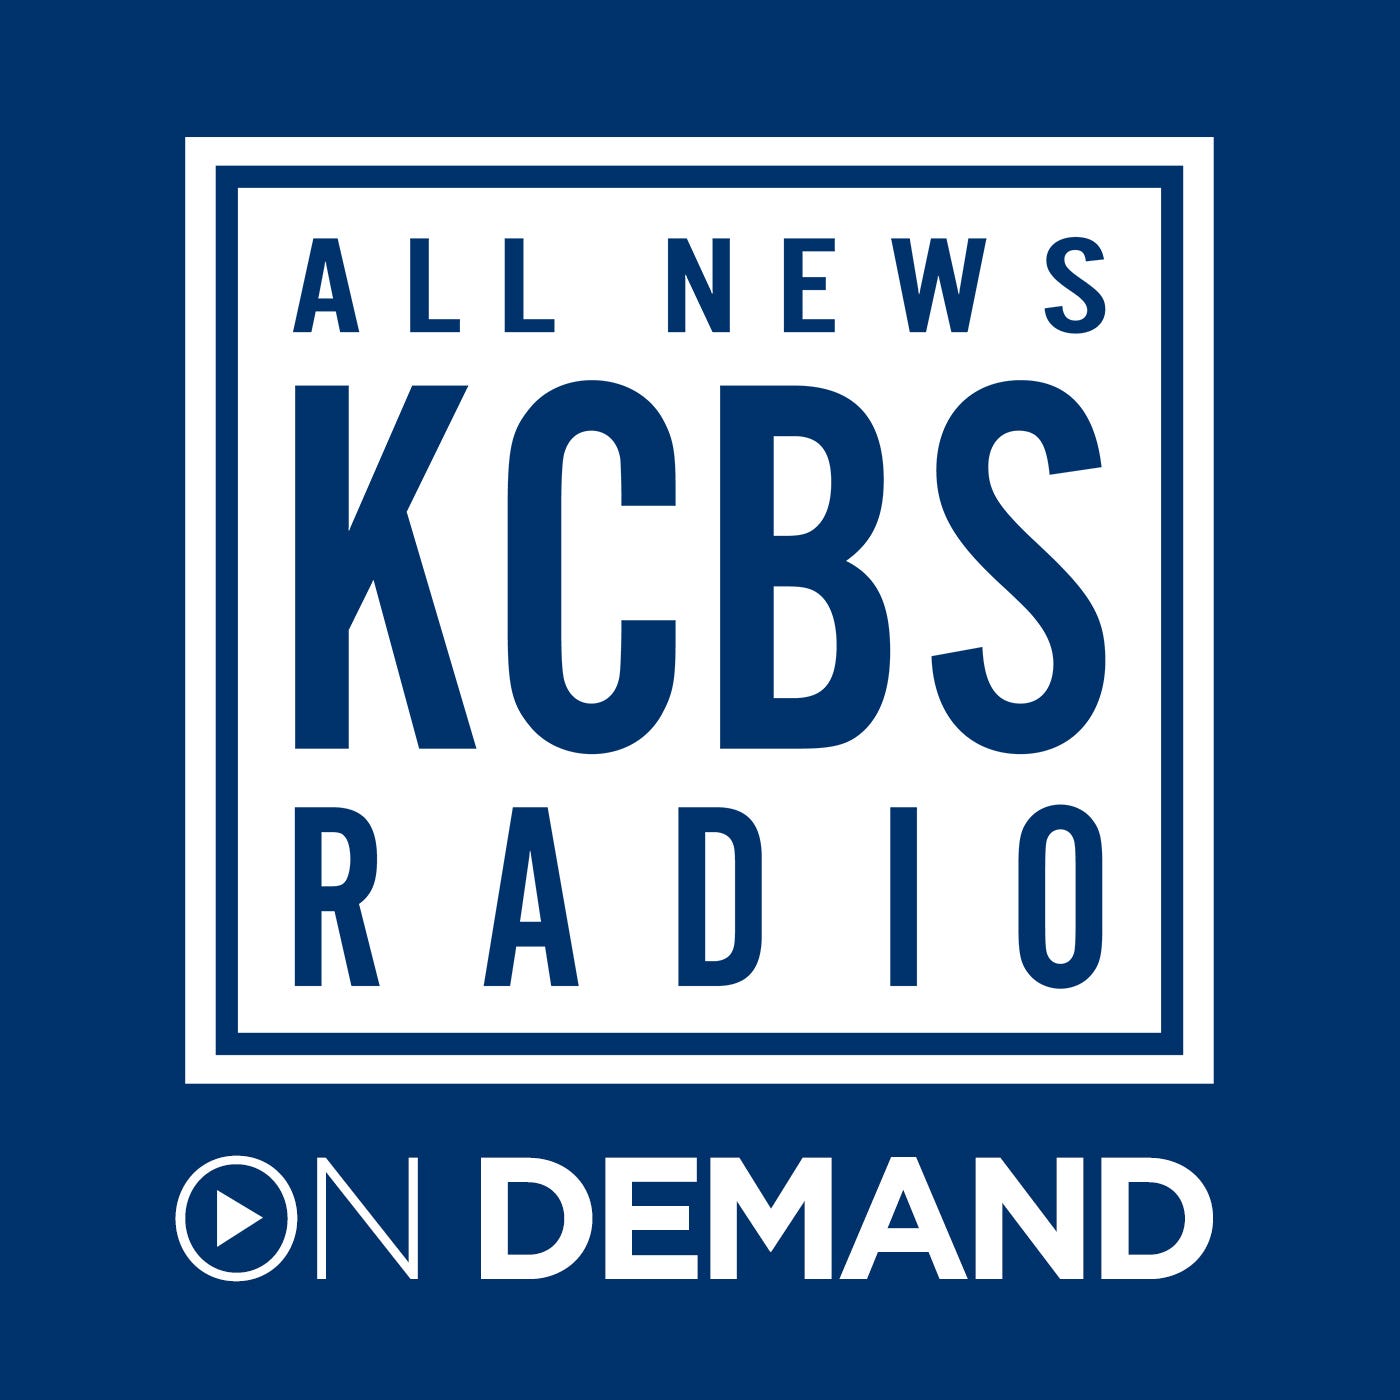 KCBS Radio Political Analyst Marc Sandalow On Harris For President in 2020